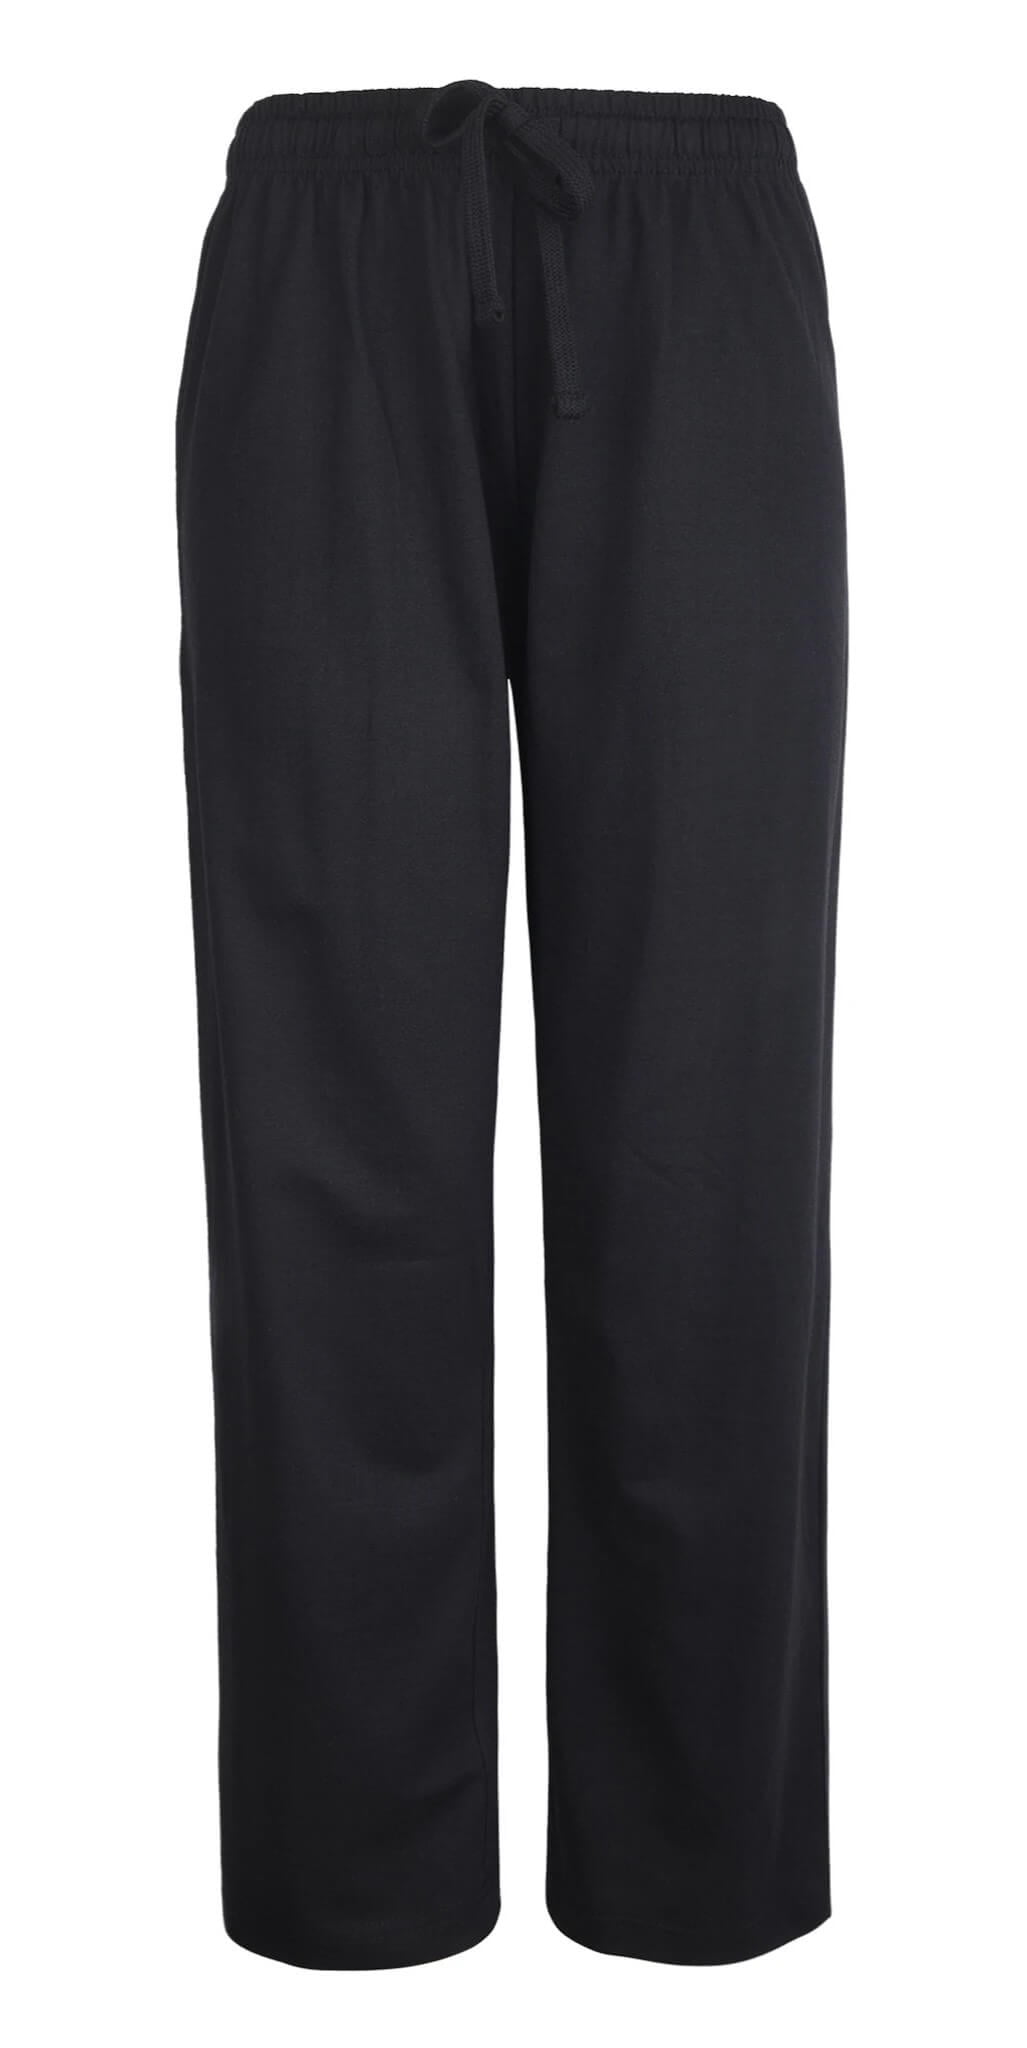 Couver Women's Casual Stretch Cotton Jersey Pants, Black L, 1 Count, 1 ...